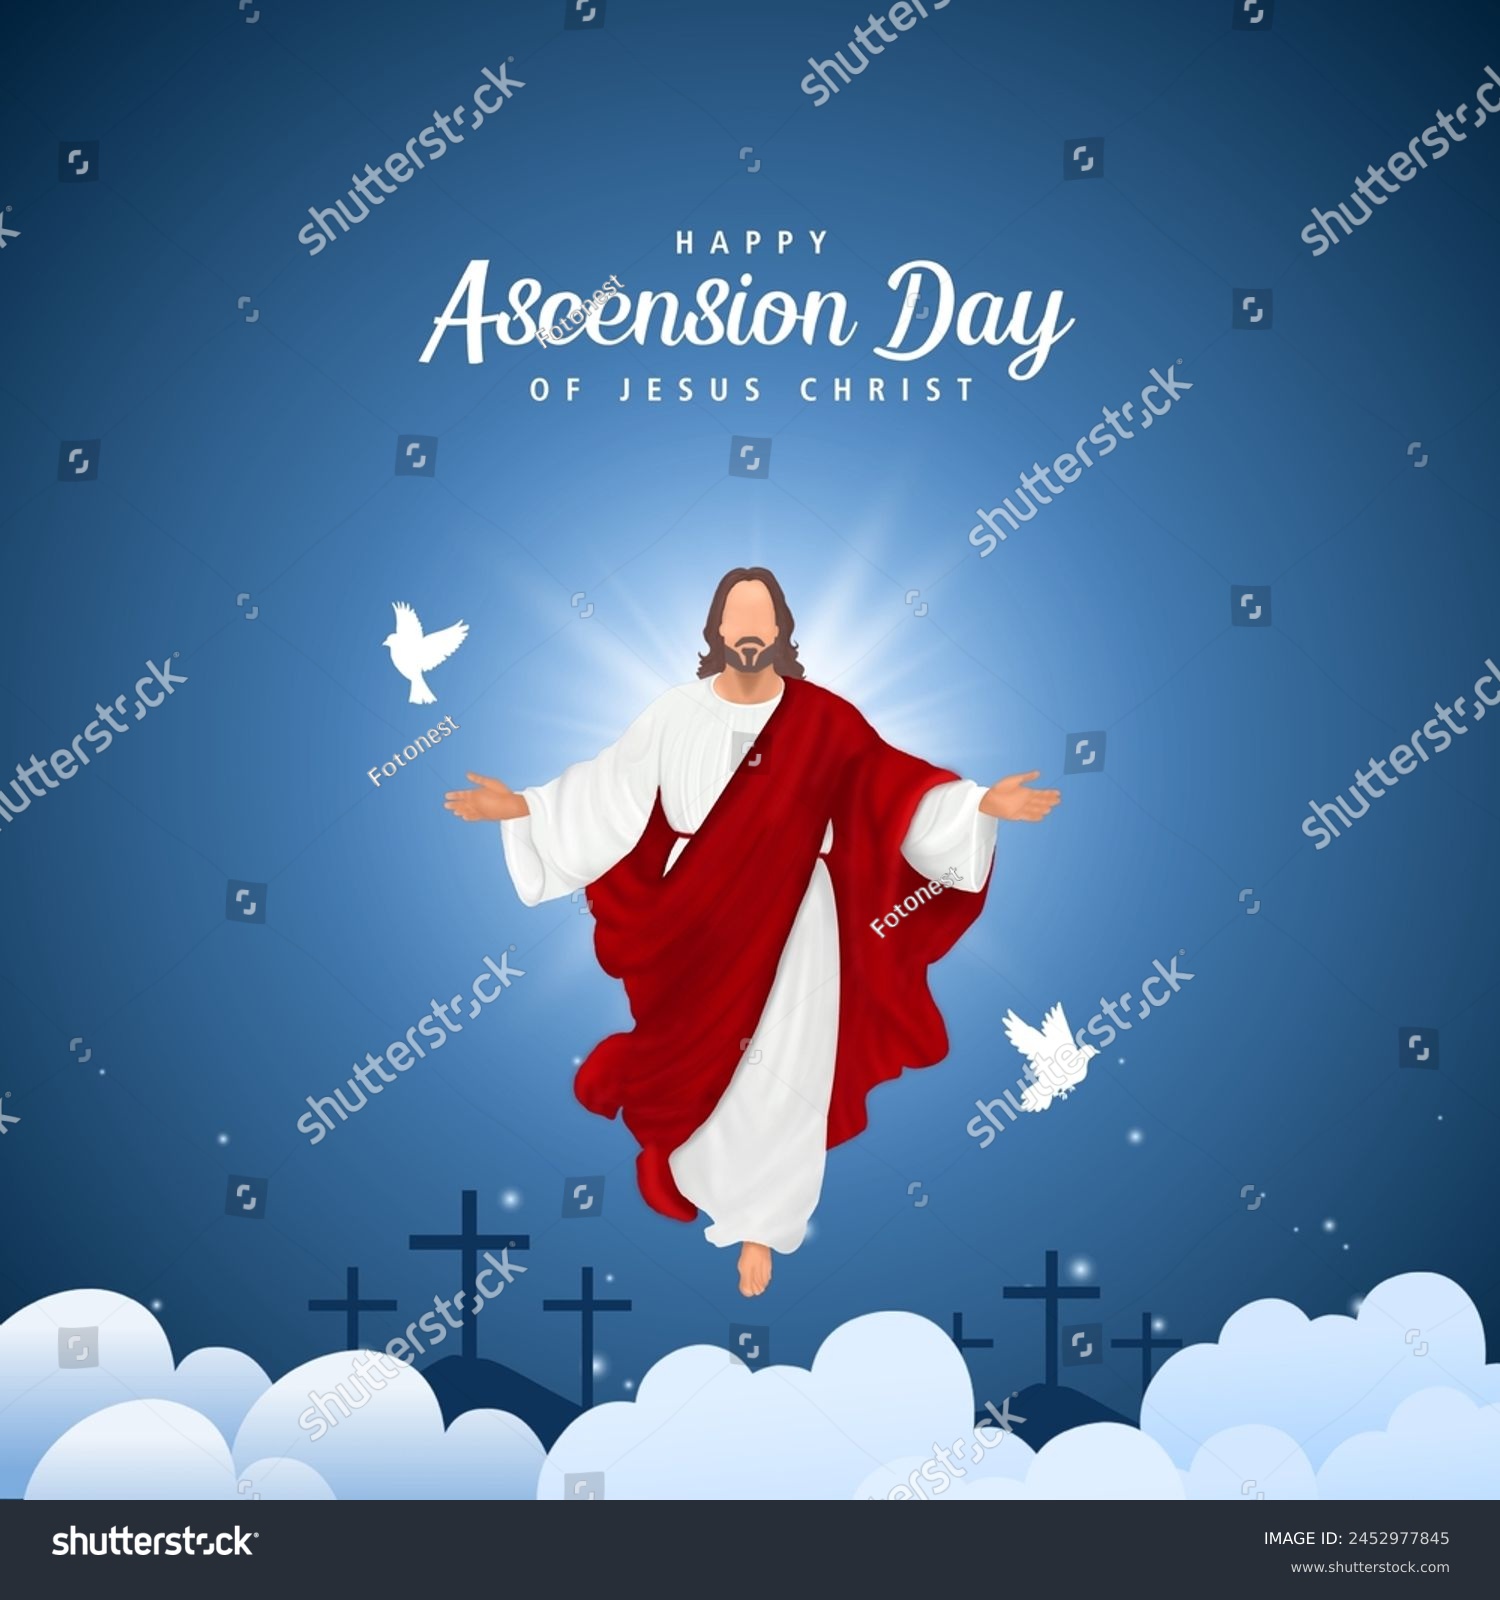 SVG of Happy Ascension Day Design with Jesus Christ in Heaven Vector Illustration. Illustration of resurrection Jesus Christ. Sacrifice of Messiah for humanity redemption. svg